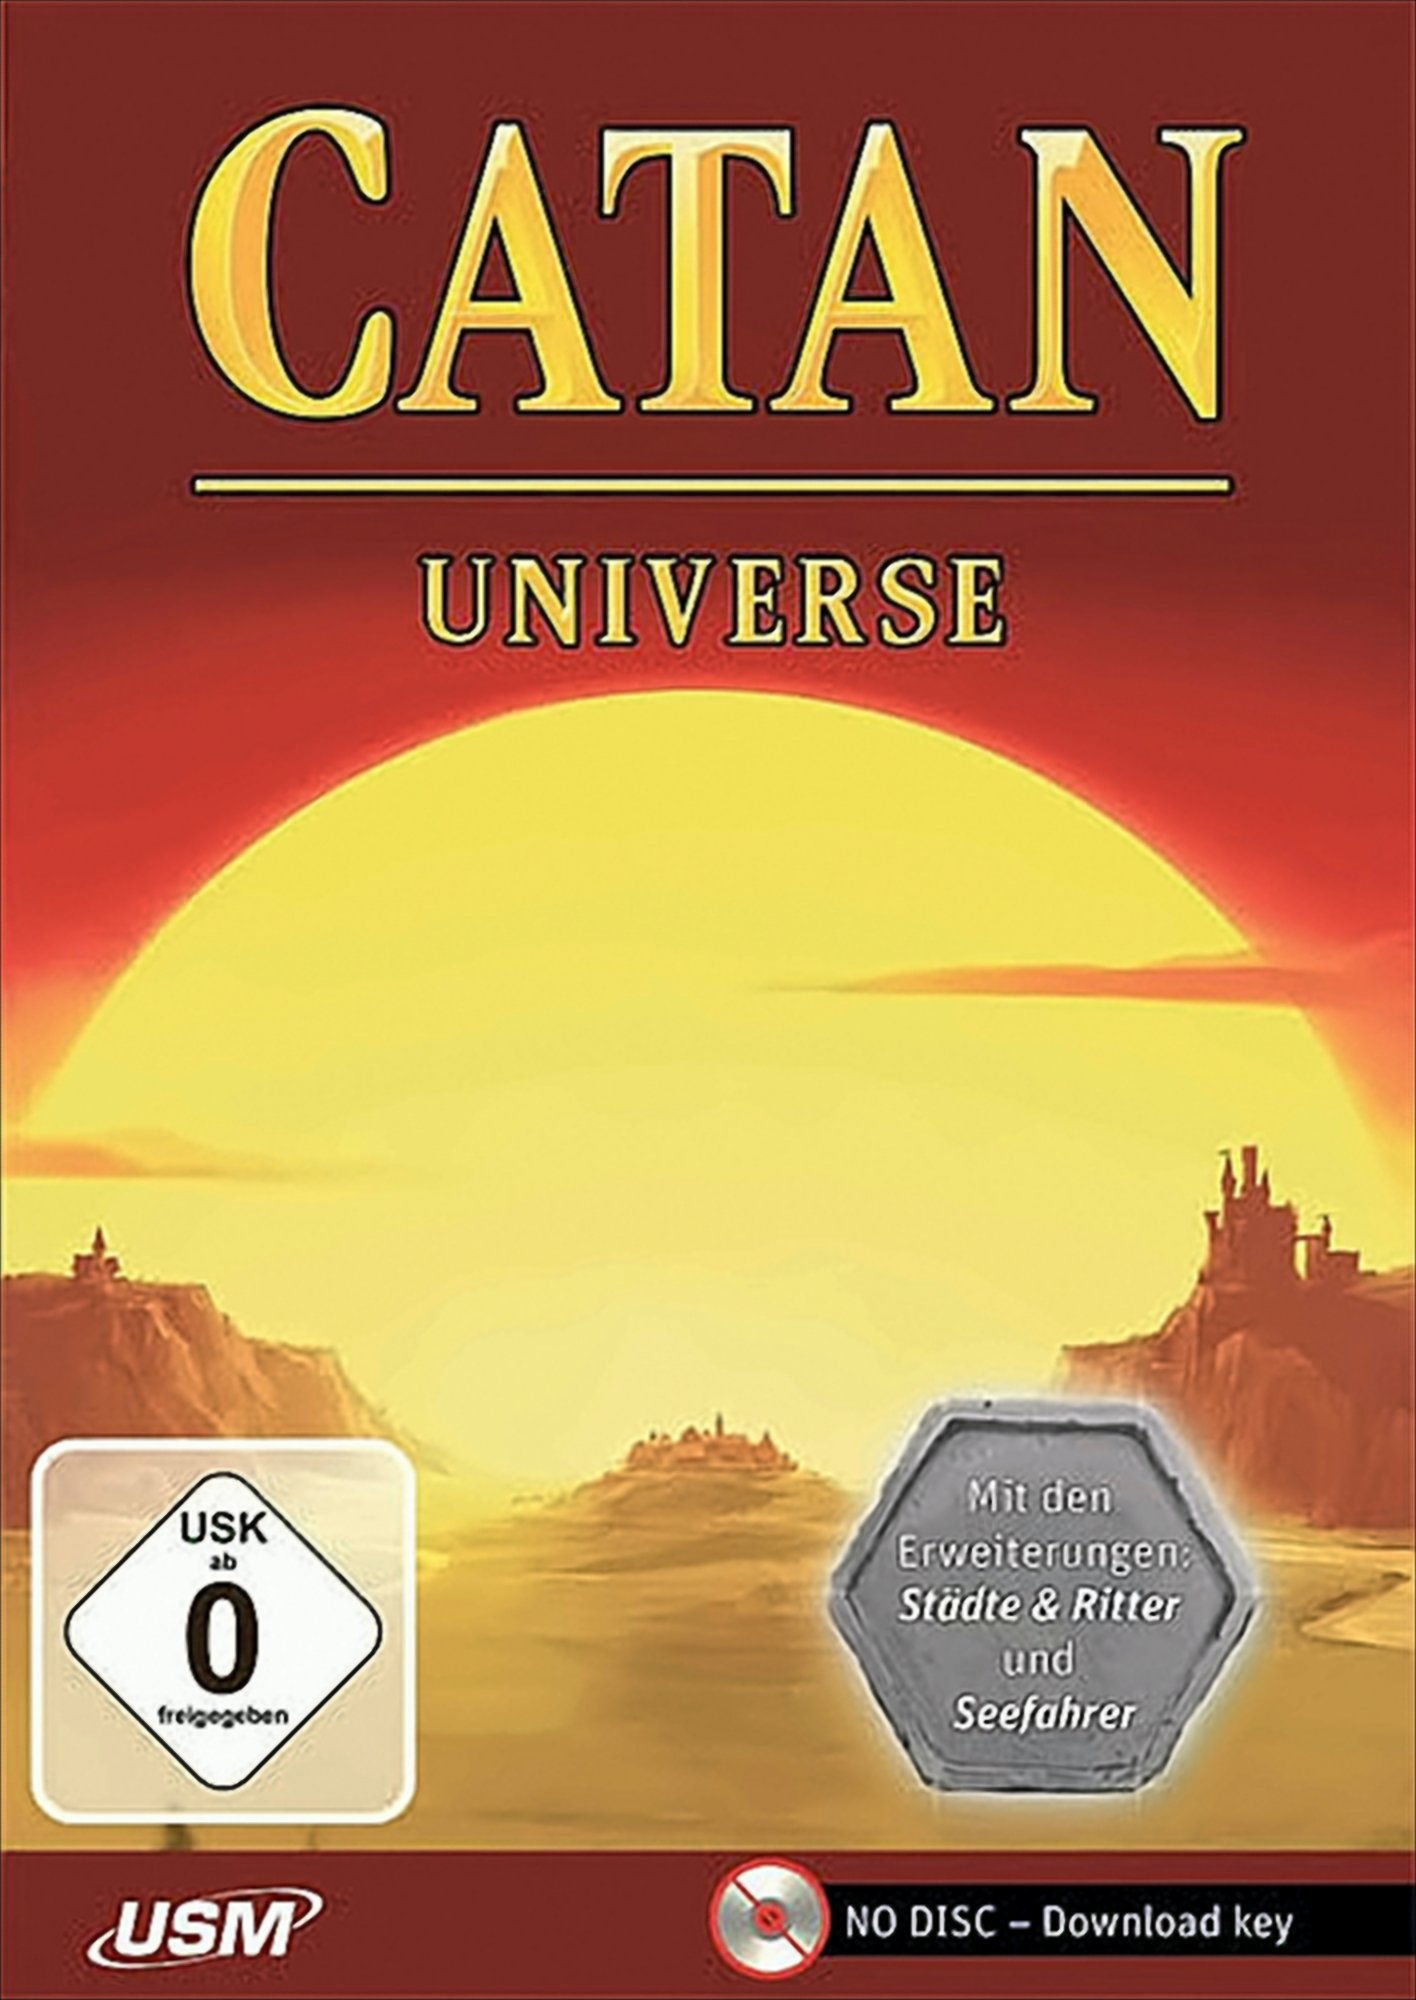 [PC] PC Universe - Box Catan